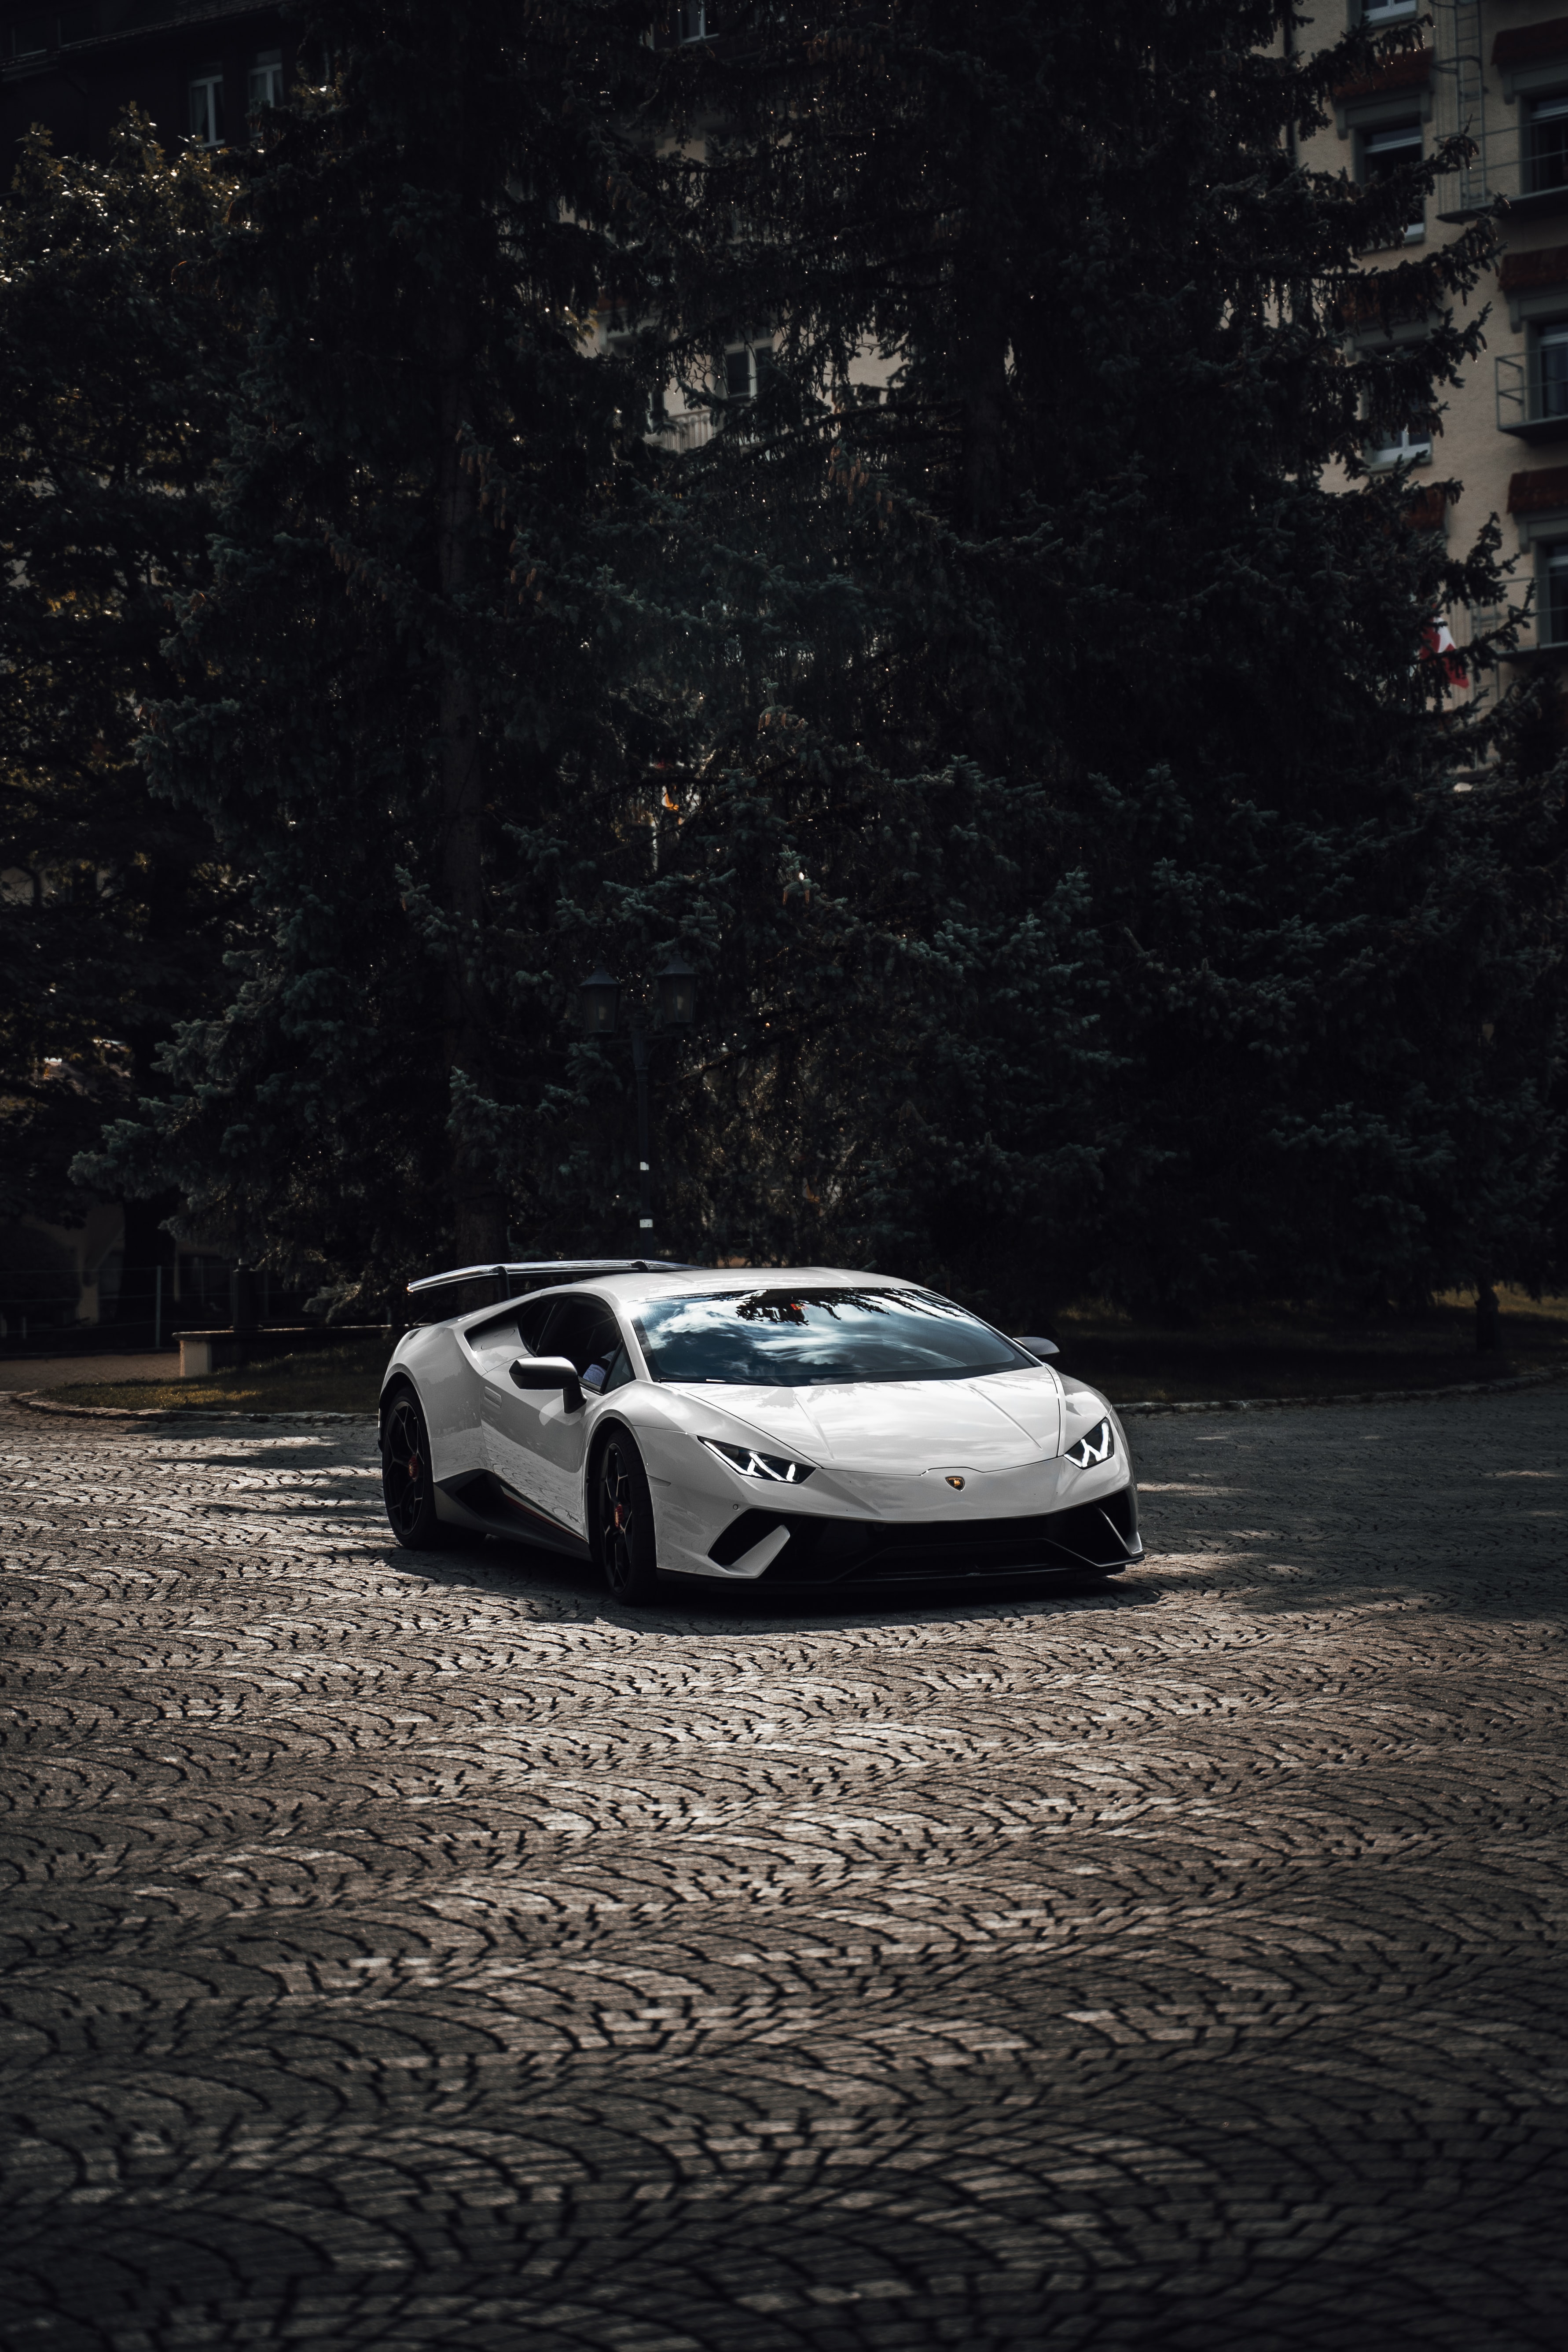 Popular Lamborghini Image for Phone